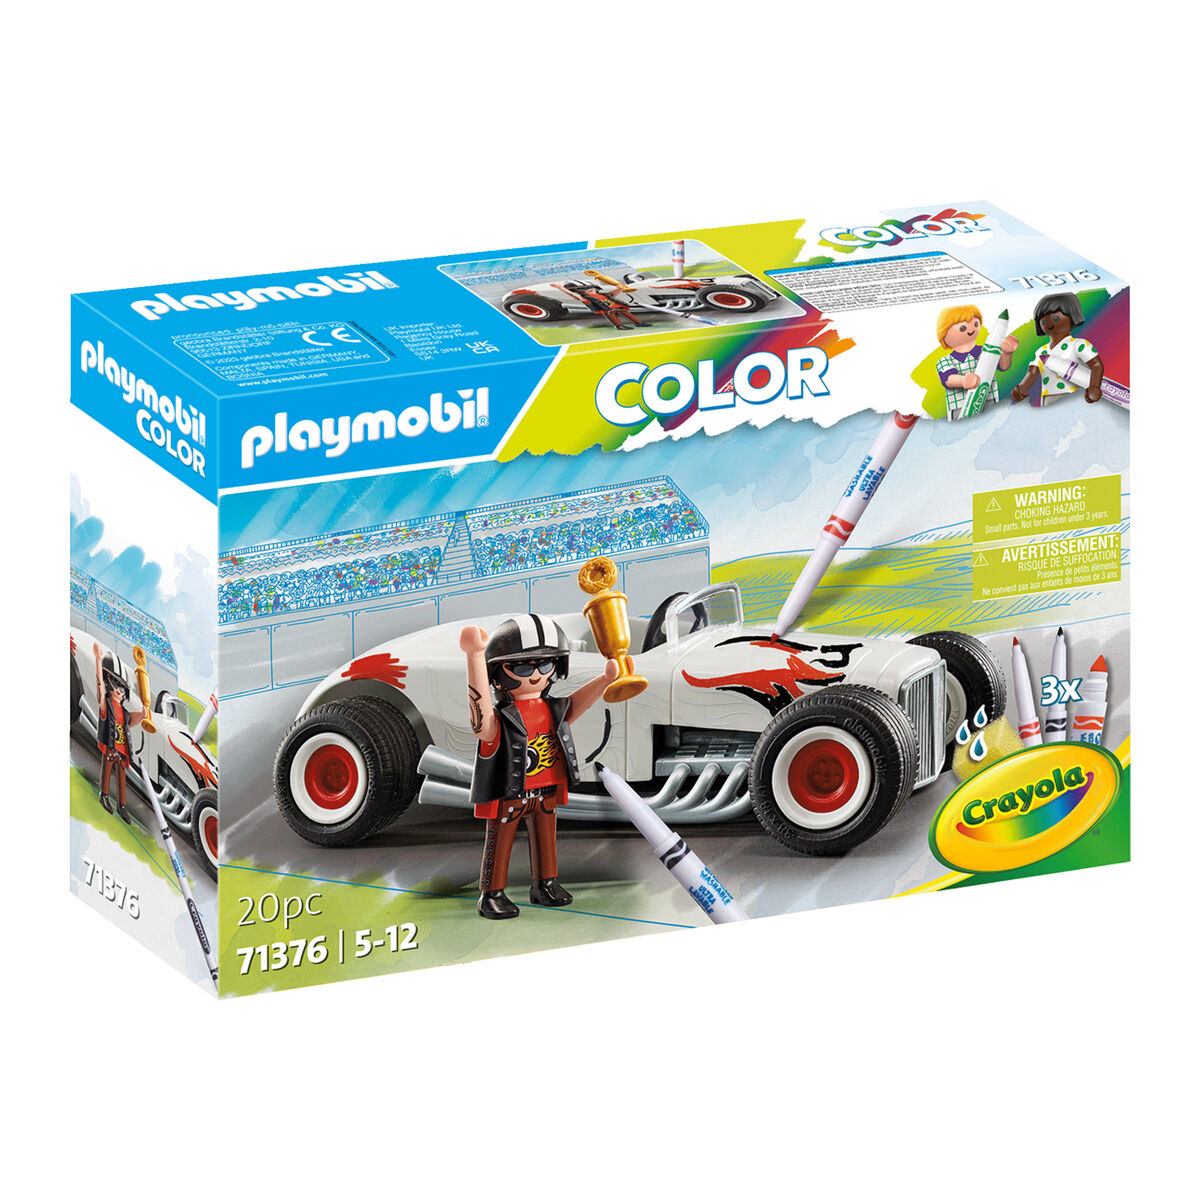 Playset Playmobil 20 Pezzi - Disponibile in 3-4 giorni lavorativi